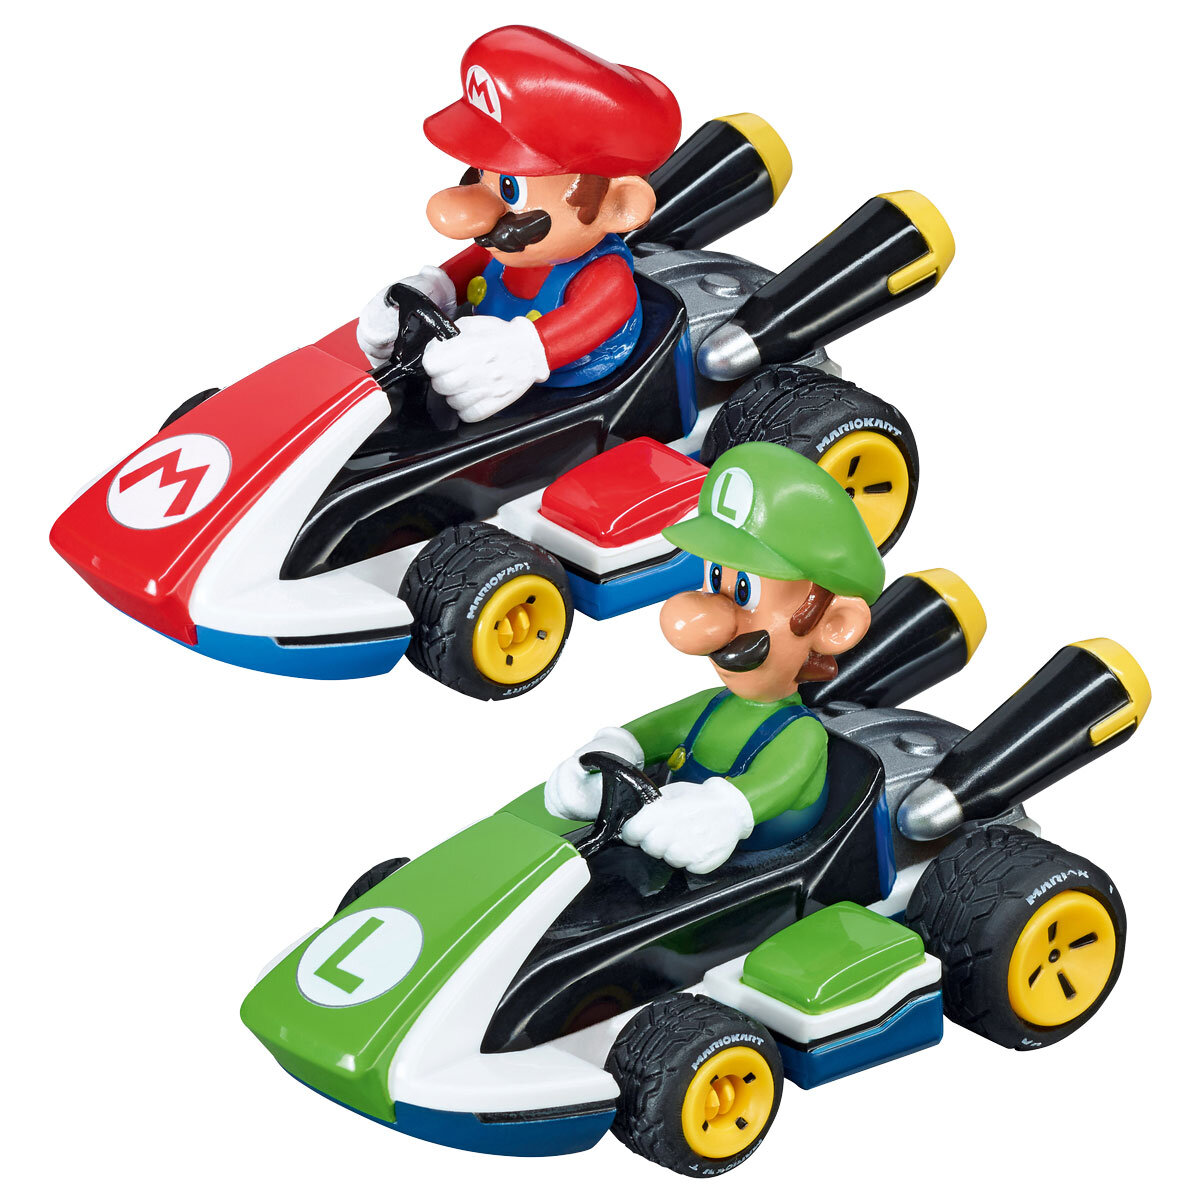 Buy Carrera Go!!! Mario Kart Racetrack Combined Item Image at Costco.co.uk